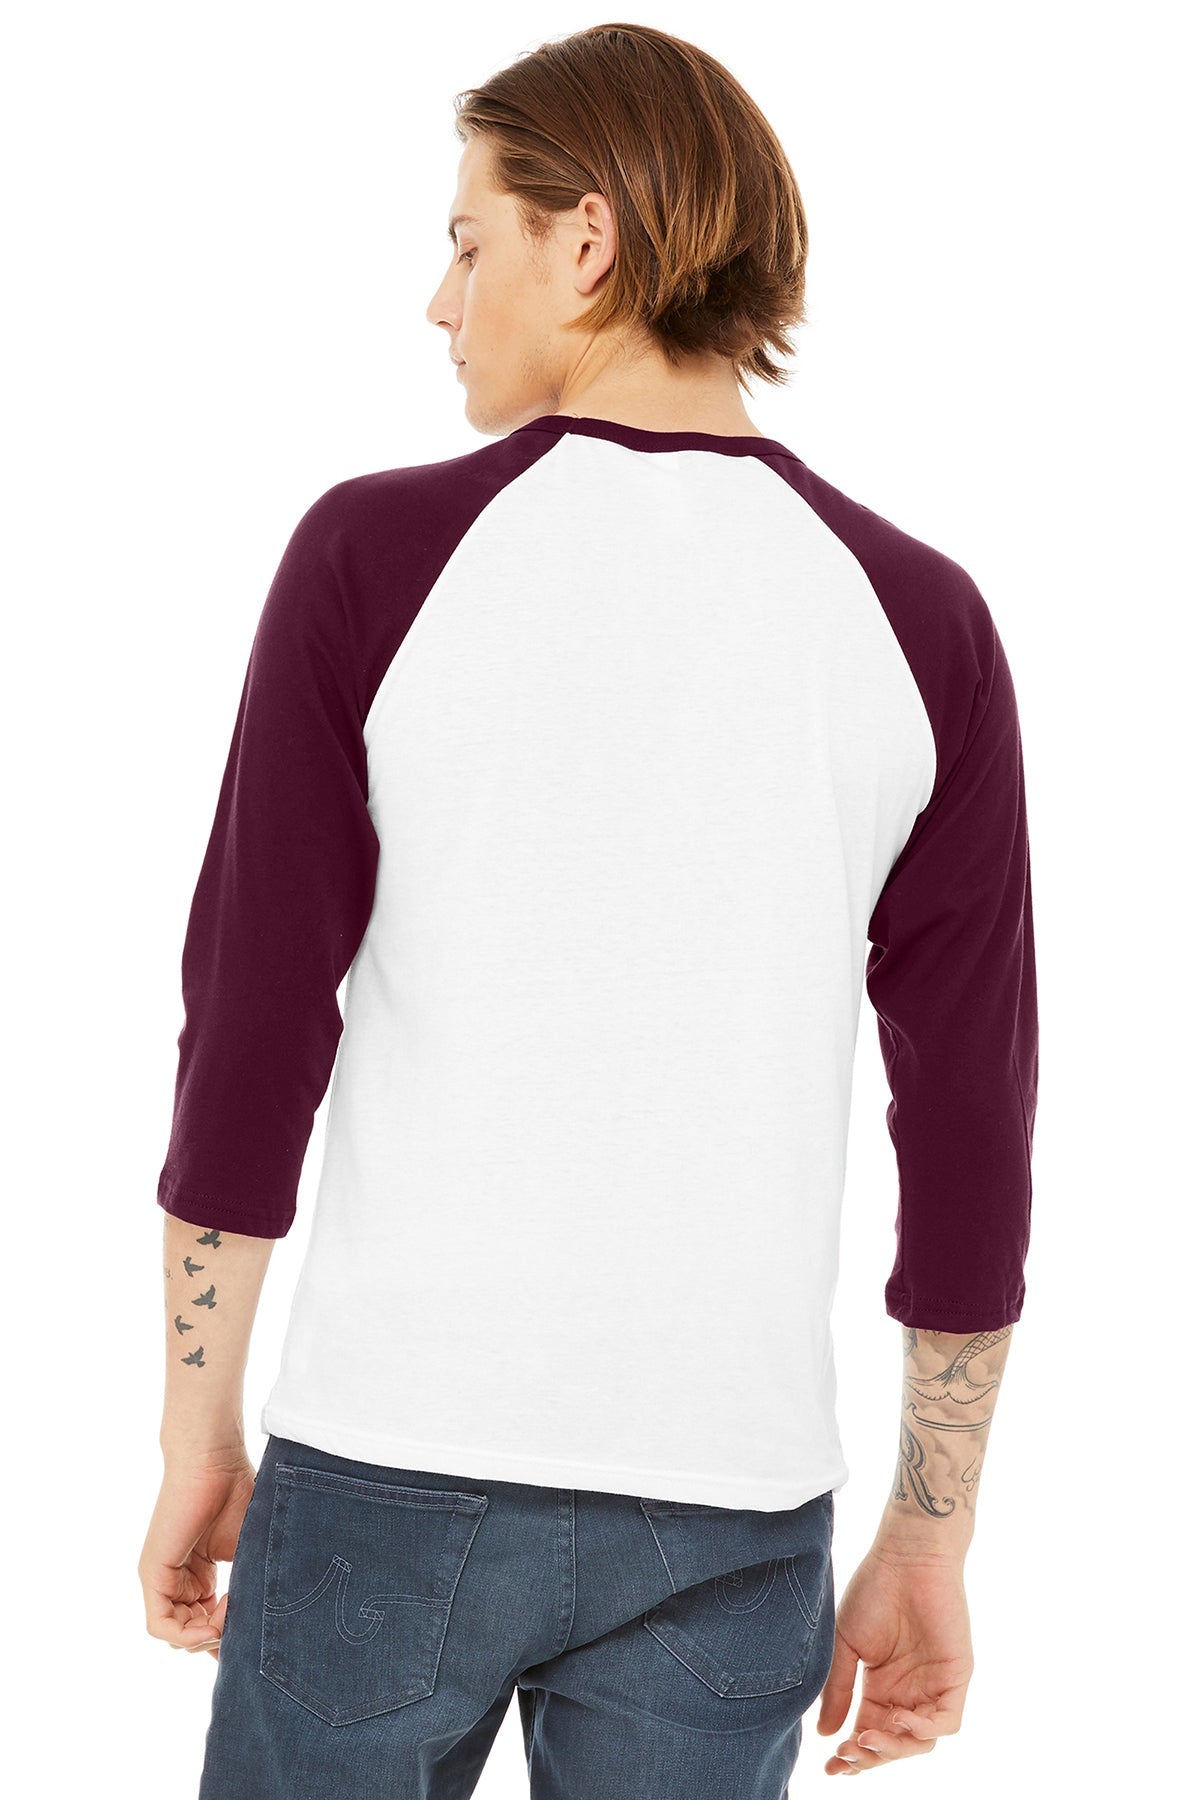 bella + canvas unisex 3/4-sleeve baseball t-shirt 3200 white/ maroon